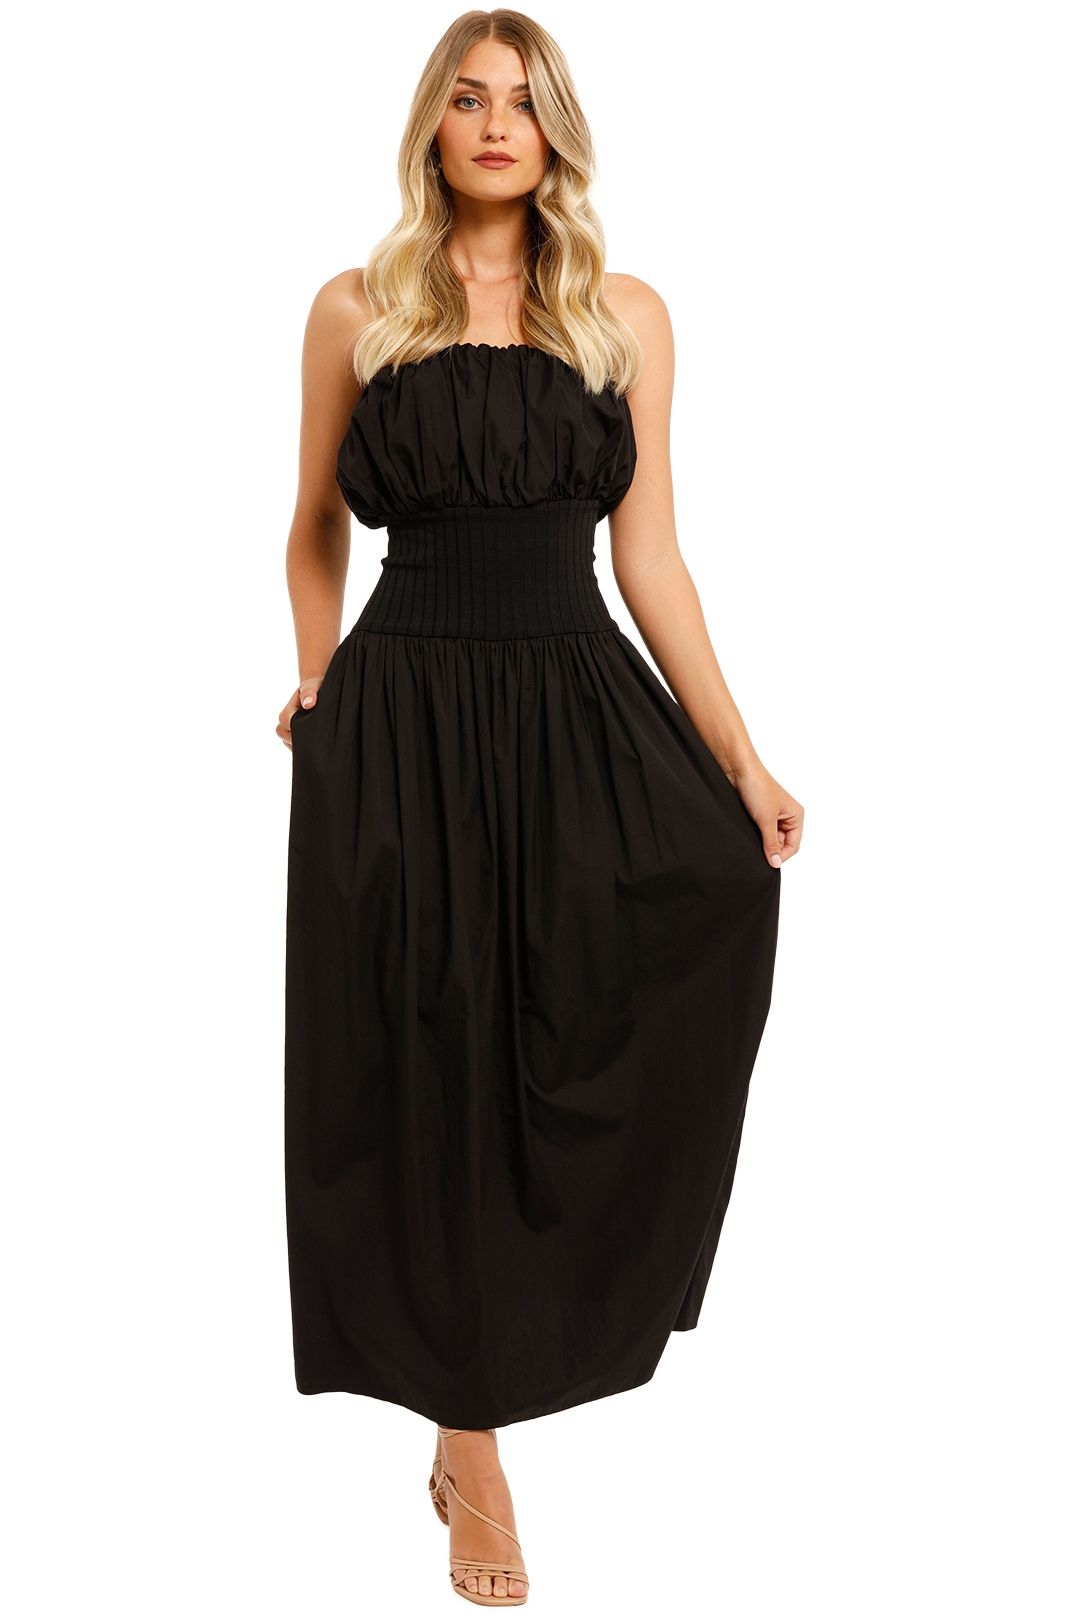 Hire Strapless Cotton Rib Dress in Black | Esse | GlamCorner